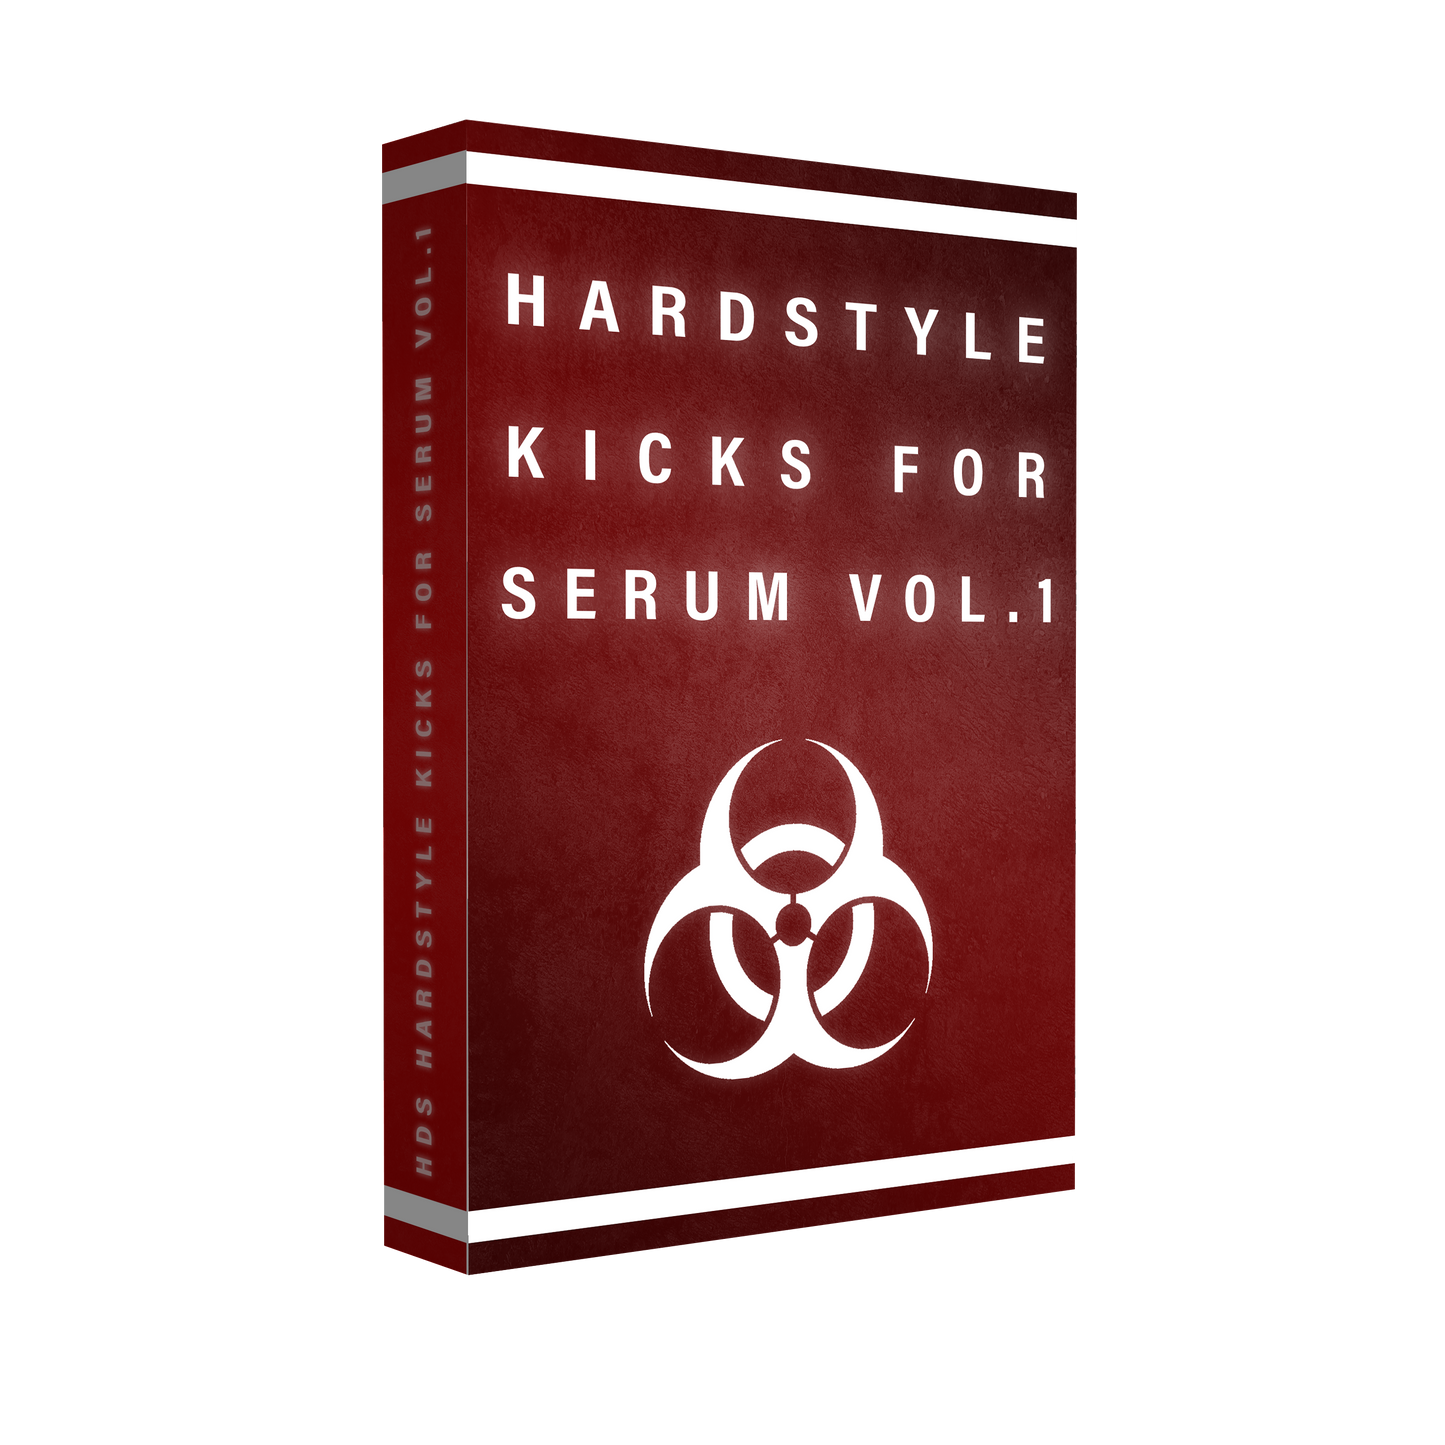 Hardstyle Kicks For Serum Vol.1